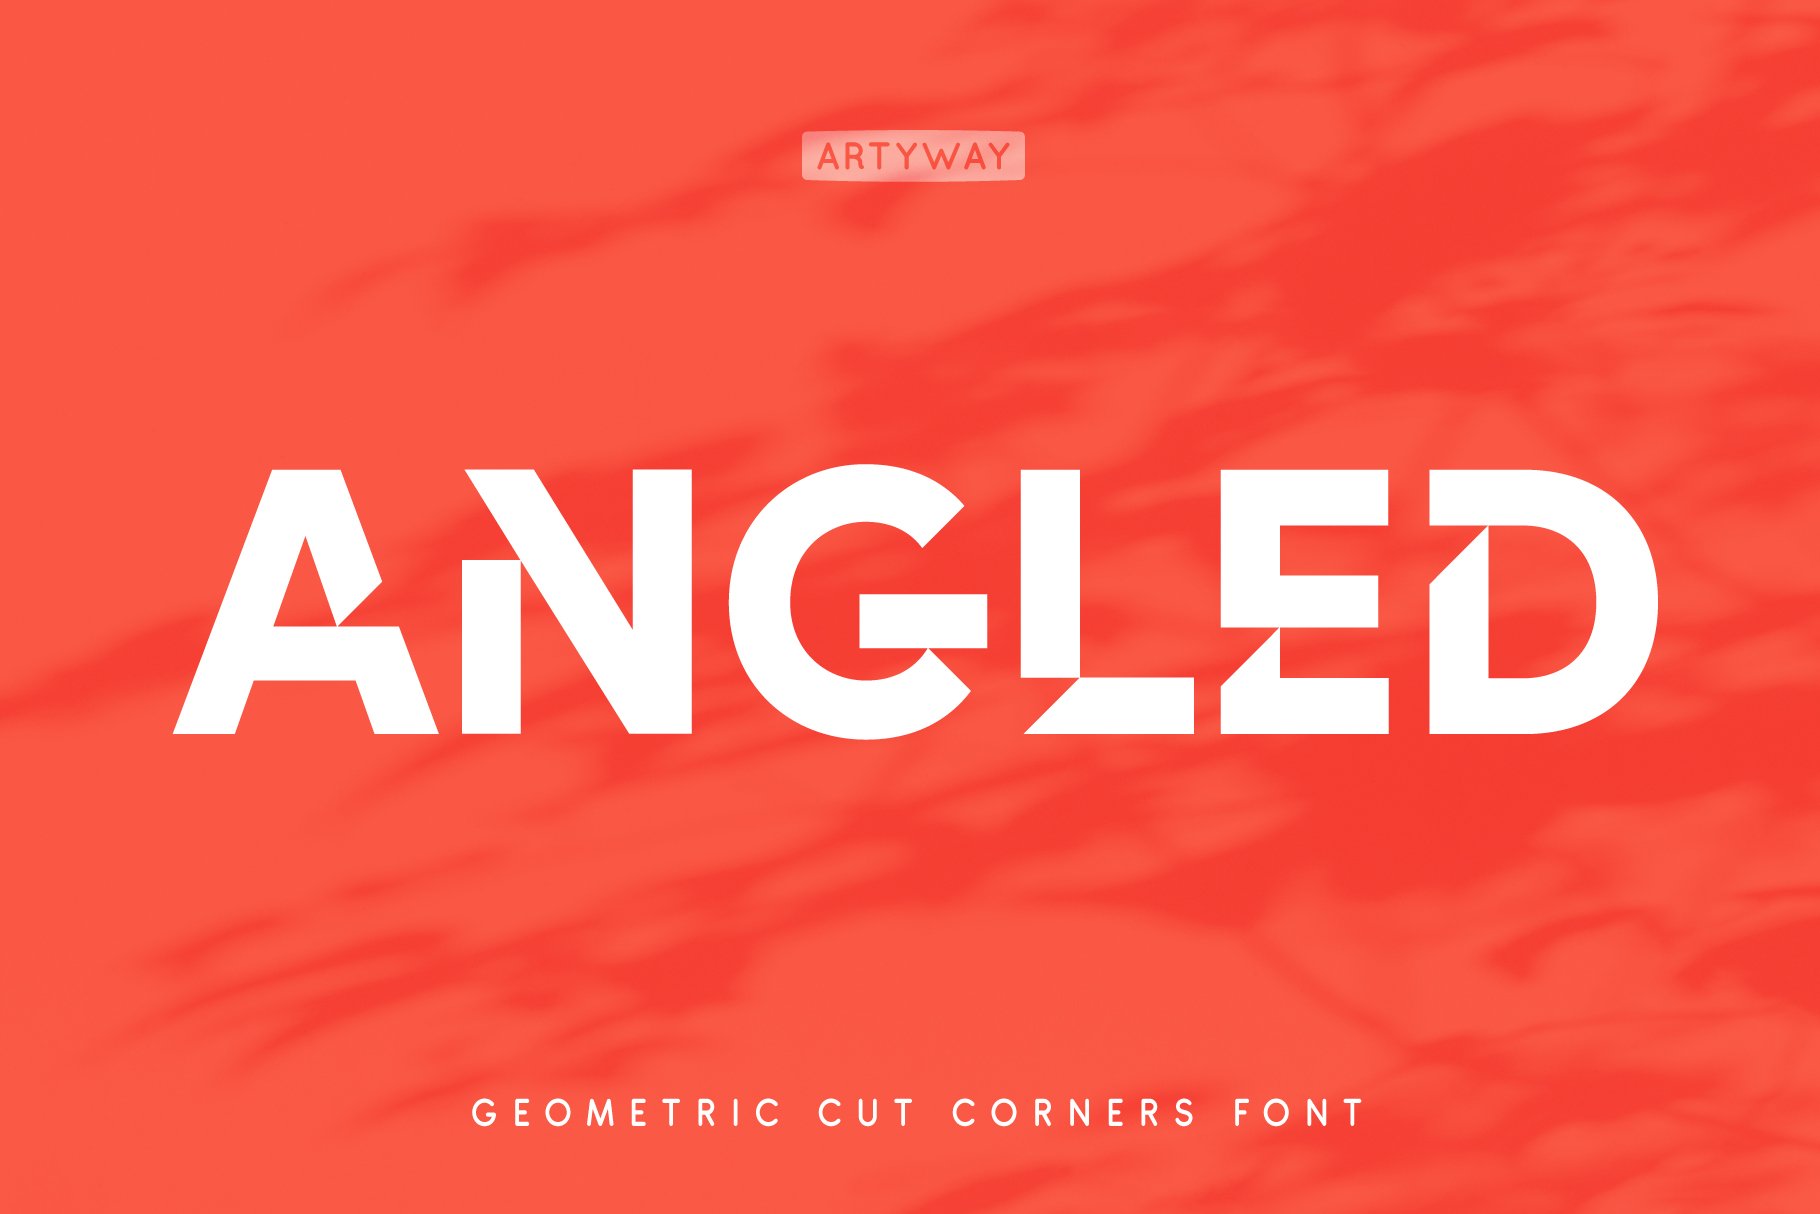 Angles Font